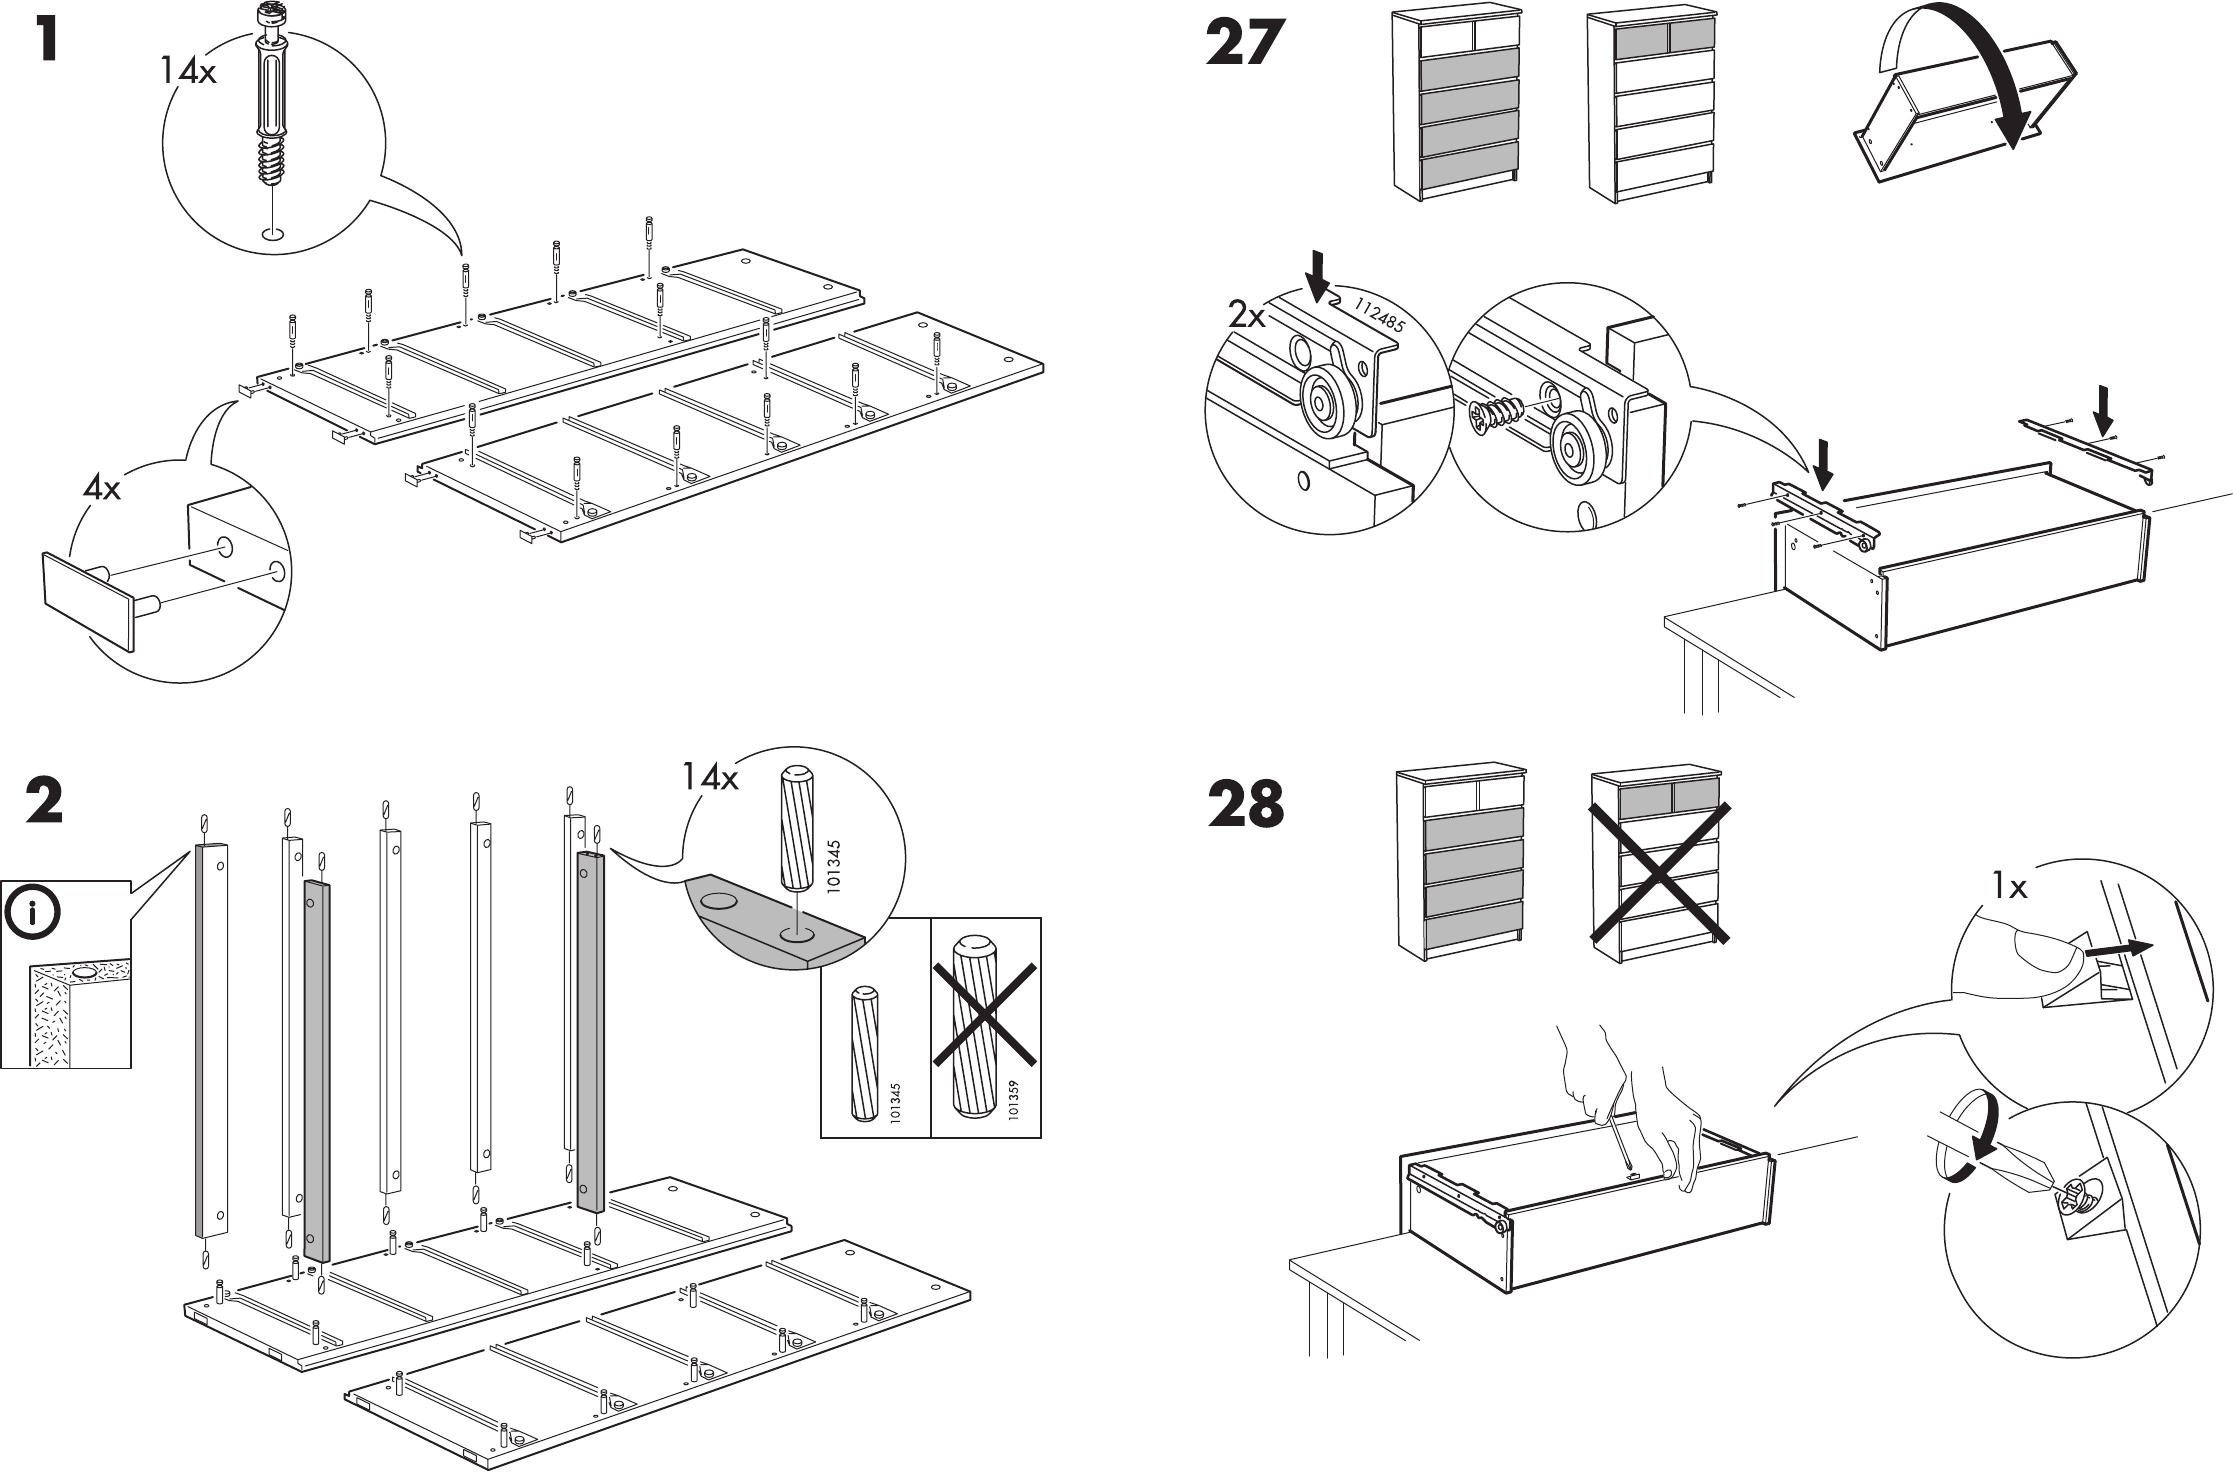 Стол икеа сборка. Ikea комод Malm чертежи. Кровать МАЛЬМ икеа схема сборки. Комод МАЛЬМ 6 ящиков схема сборки. Комод МАЛЬМ икеа схема сборки.